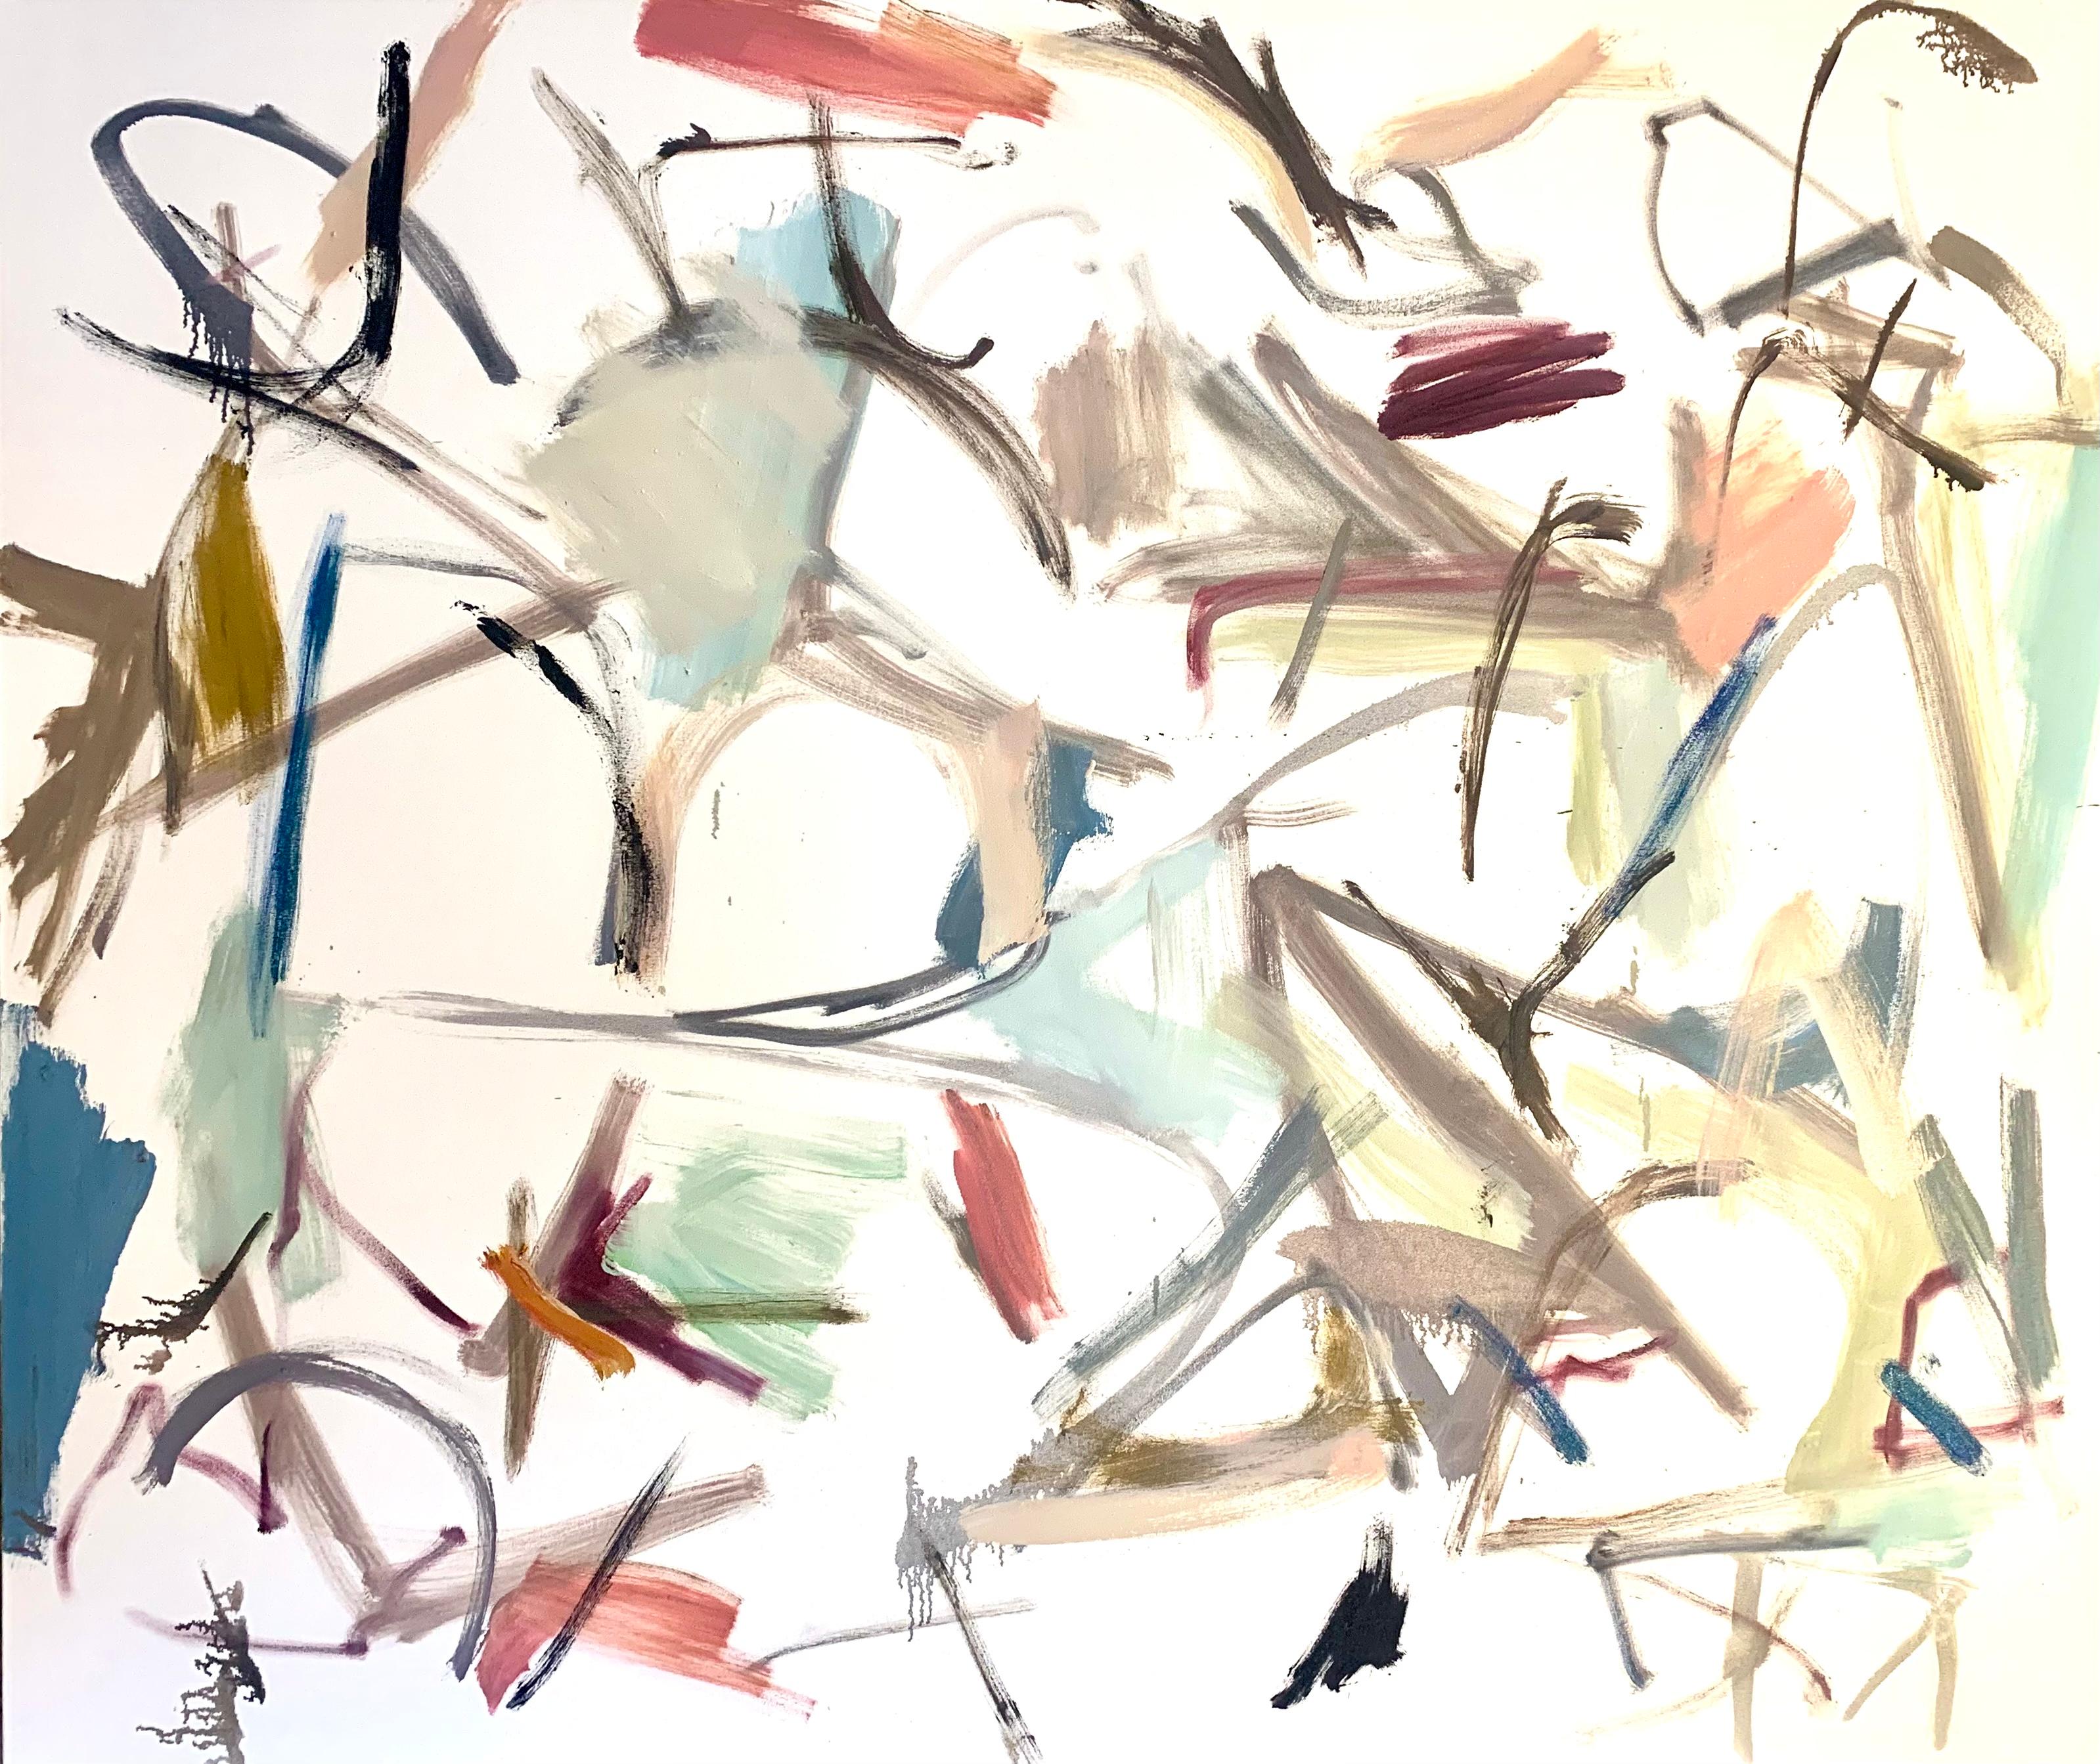 Scott Pattinson Abstract Painting – All seine Momente